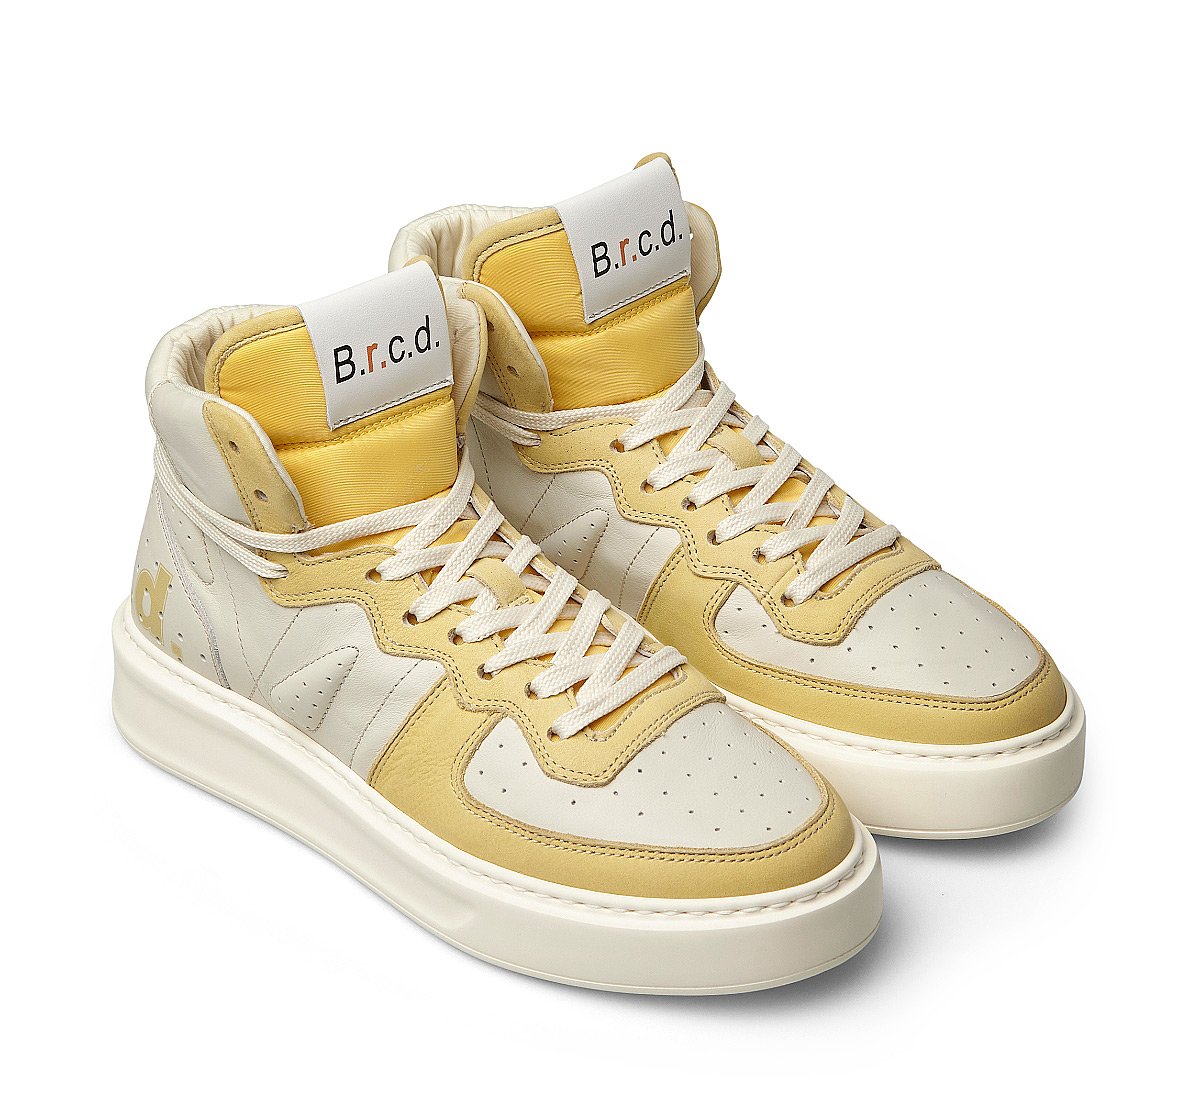 Barracuda B.R.C.D. Sneaker